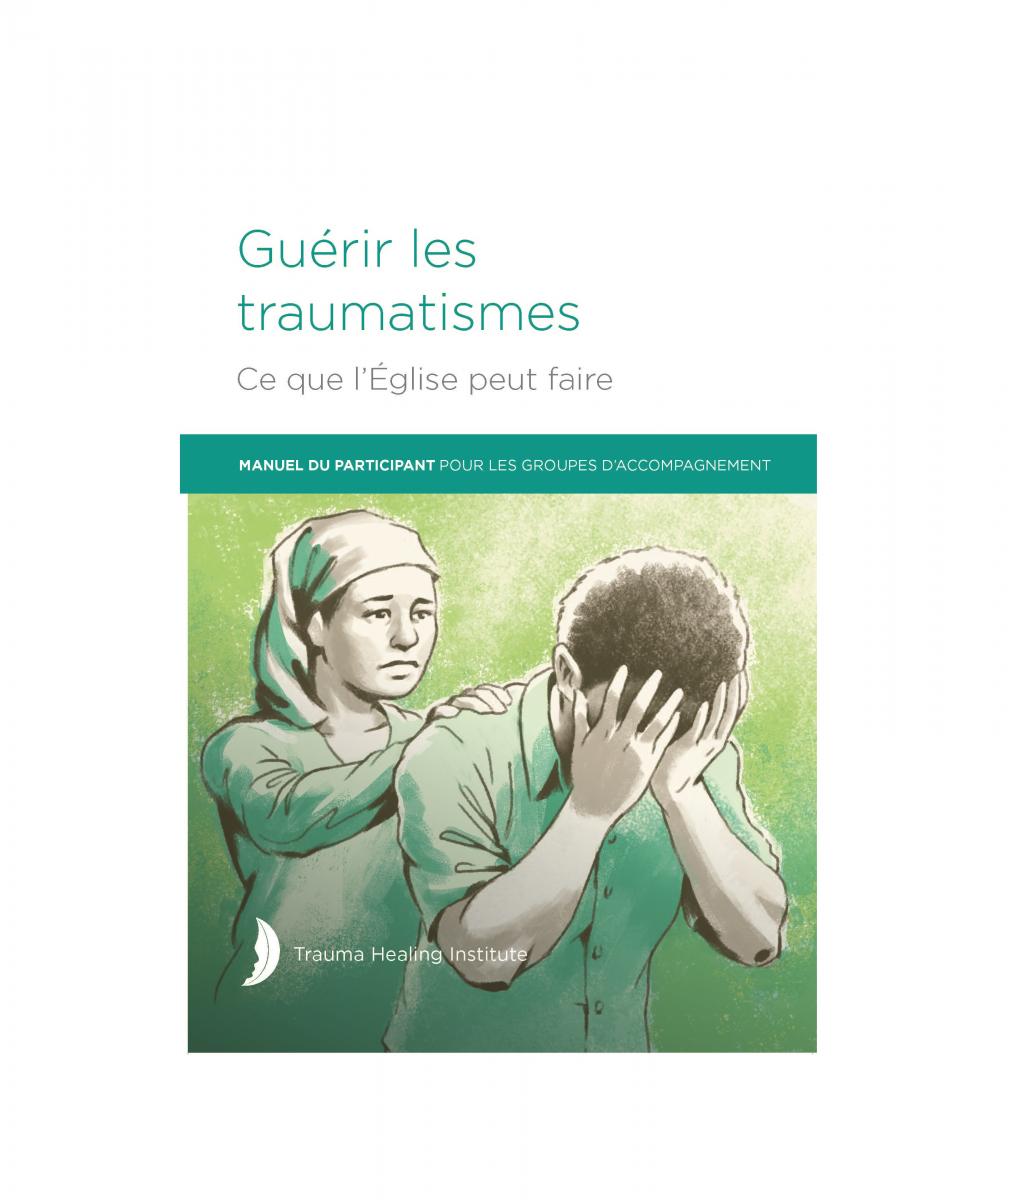 Guérir les traumatismes: Manuel Du Participant Pour Les Groupes D'Accompagnement Edición 2021 - Impresión bajo demanda